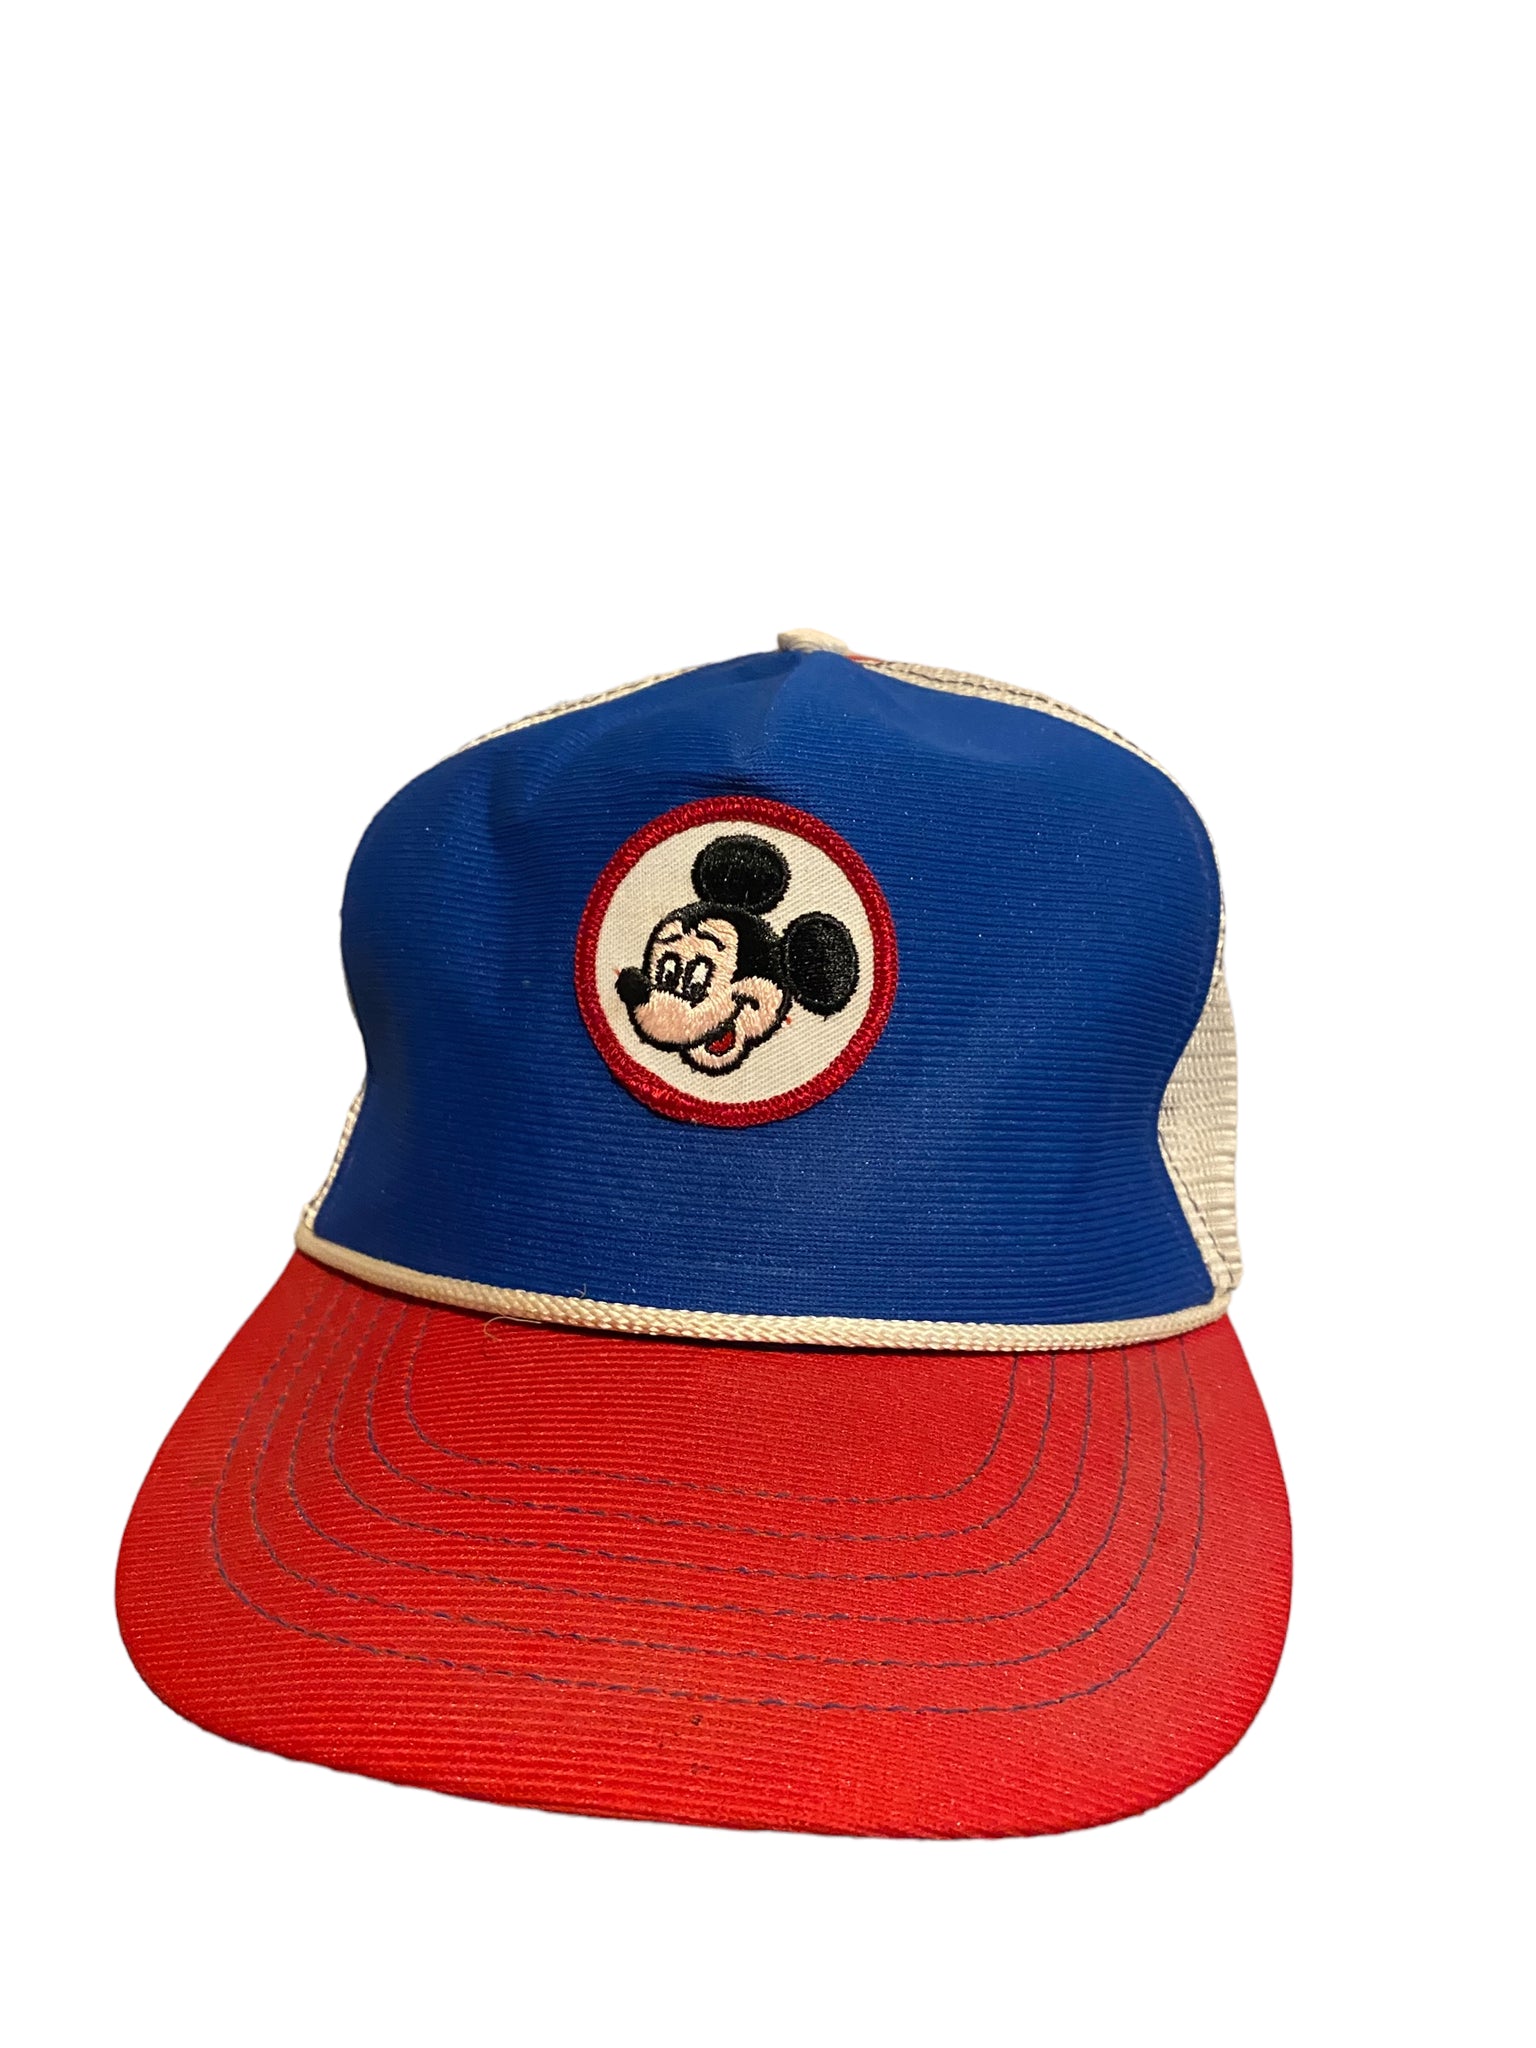 Vintage Walt Disney Mickey Mouse Patch Snapback Trucker Hat Red White Blue S/m